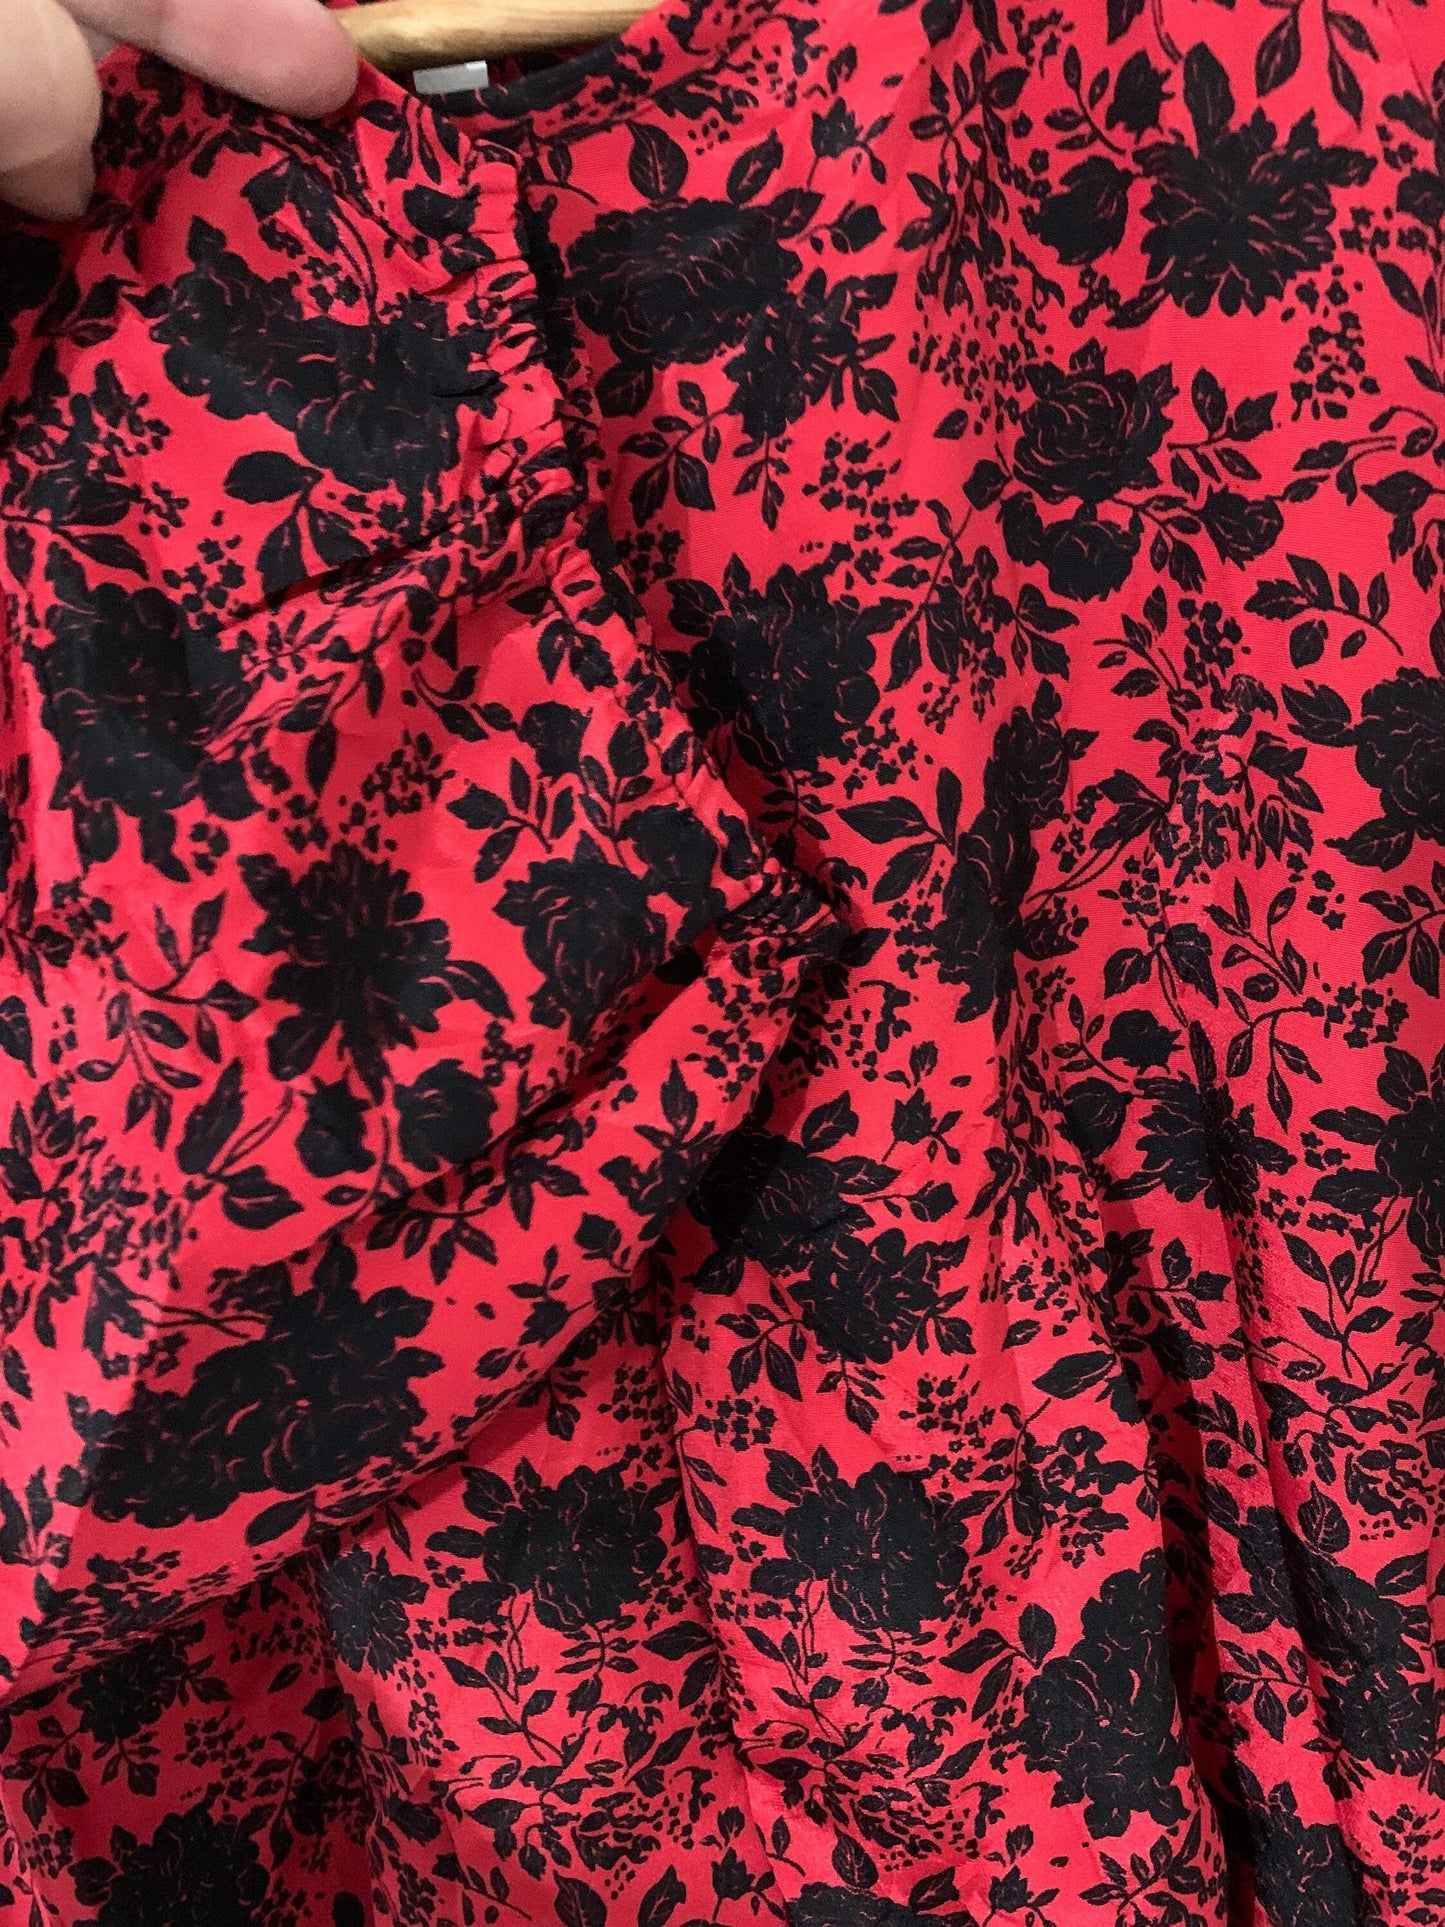 Vintage 1980s red and black dress vintage  - Day Dress  floral pattern dress Rare Plus Size eu 42 size 16 red voluptuous vintage